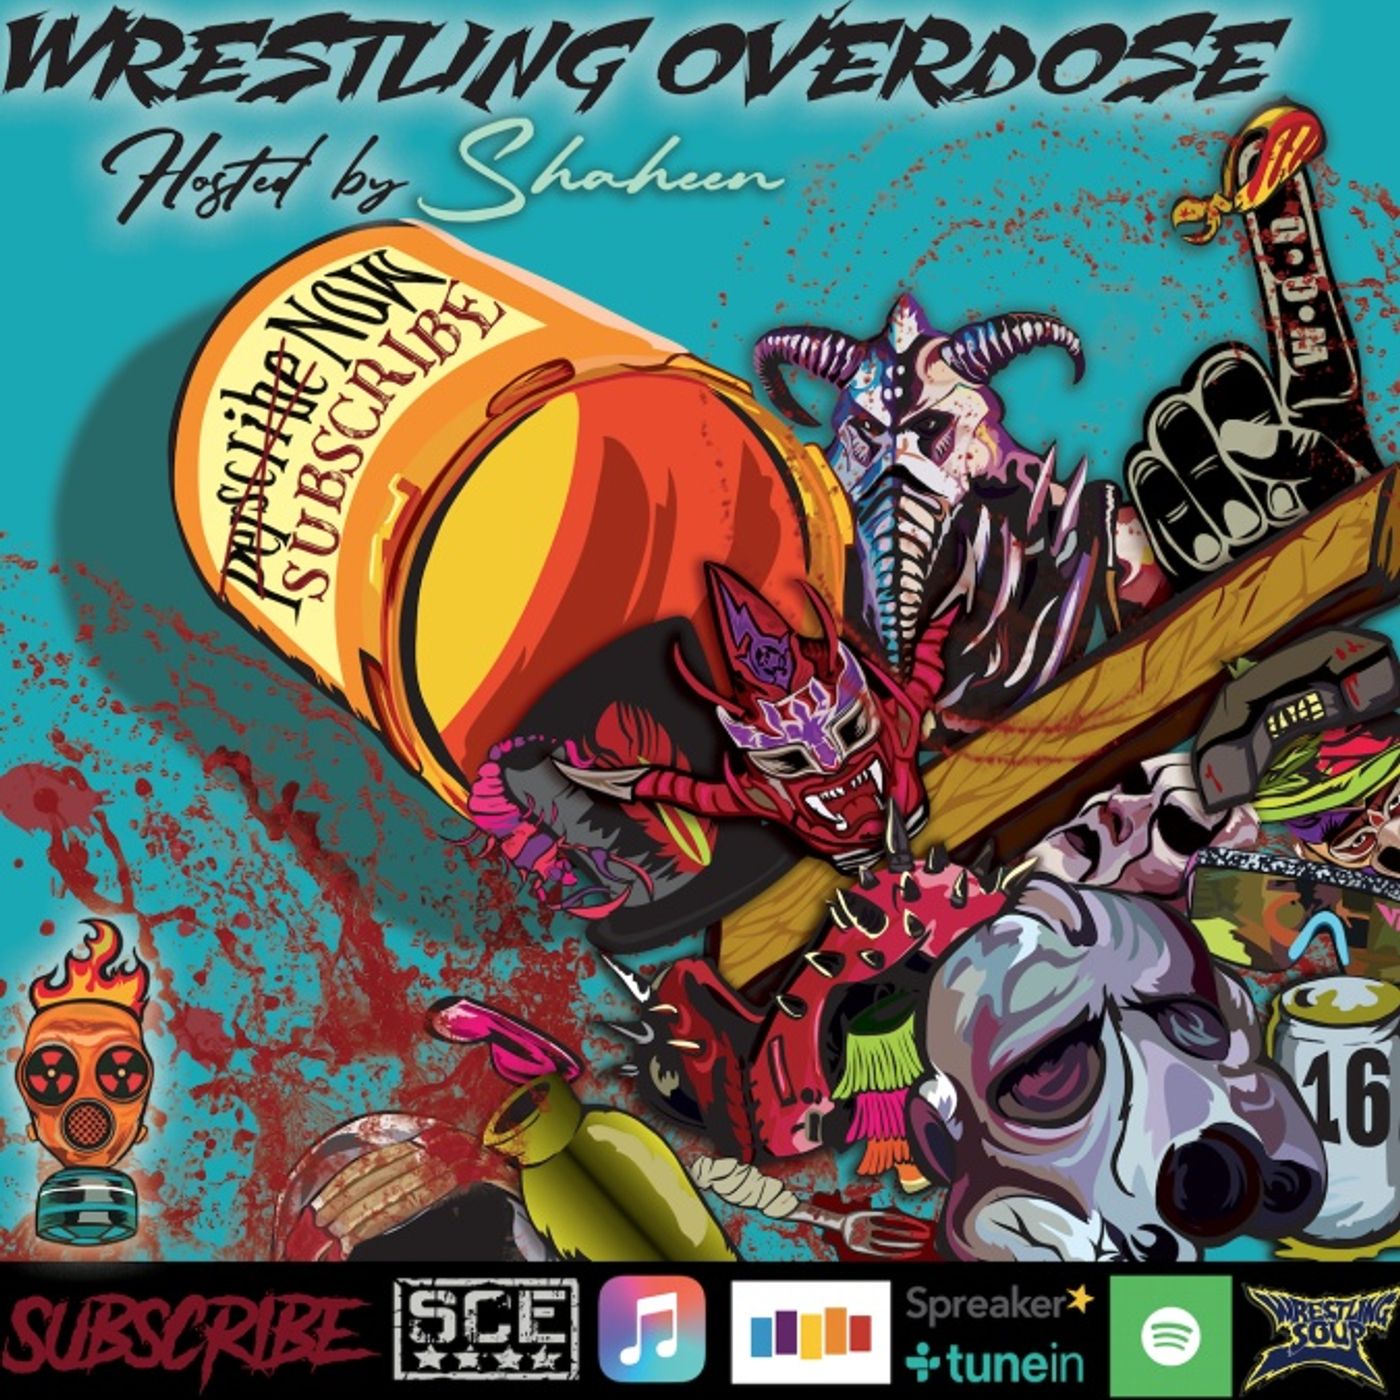 Wrestling Overdose:NHG